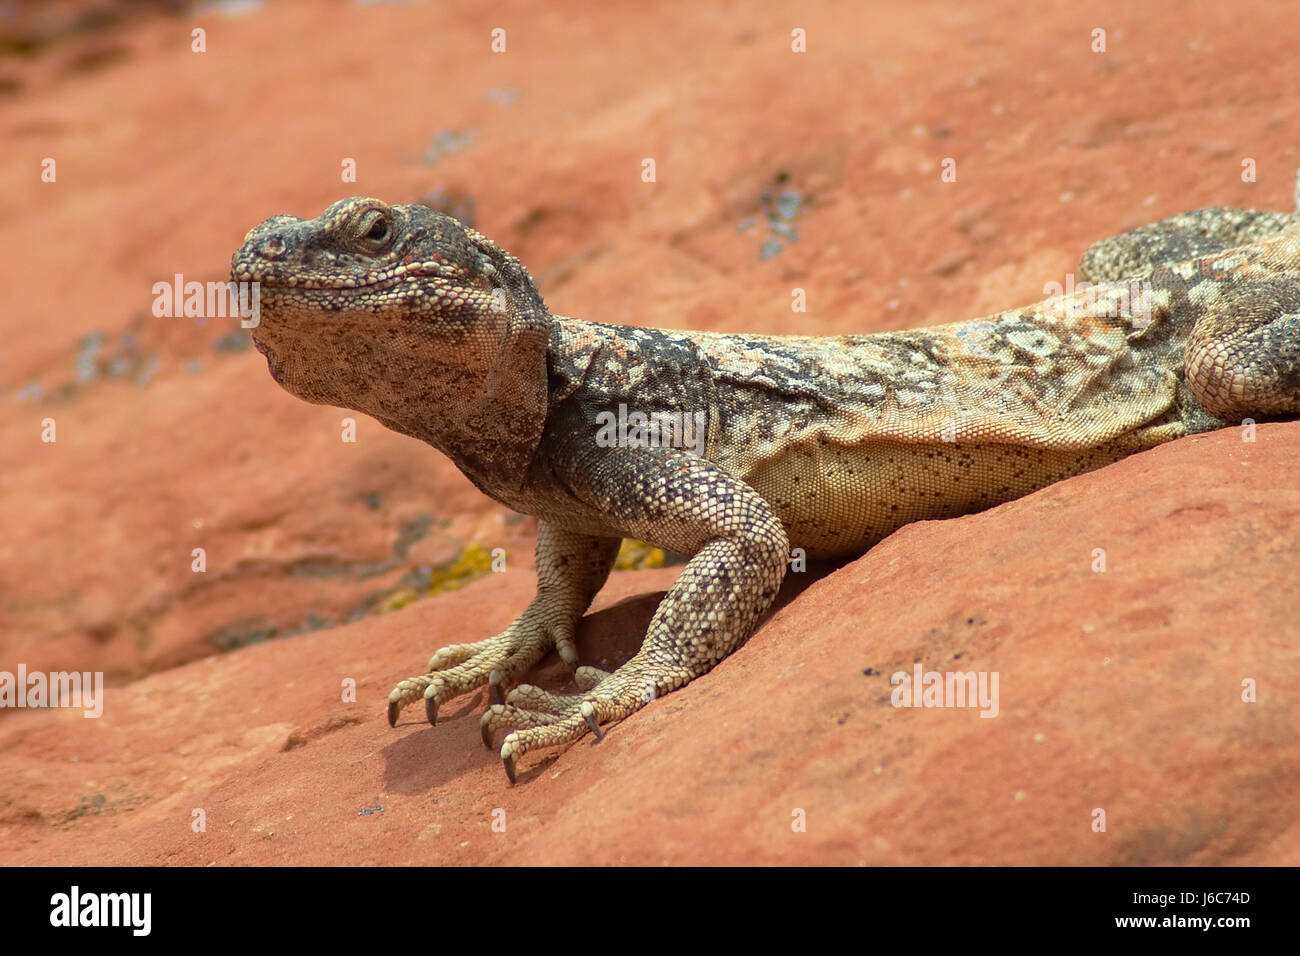 Stati Uniti nevada wstenleguan quotdisposaurus dorsalisquot quotdesert iguanaquot wste Foto Stock